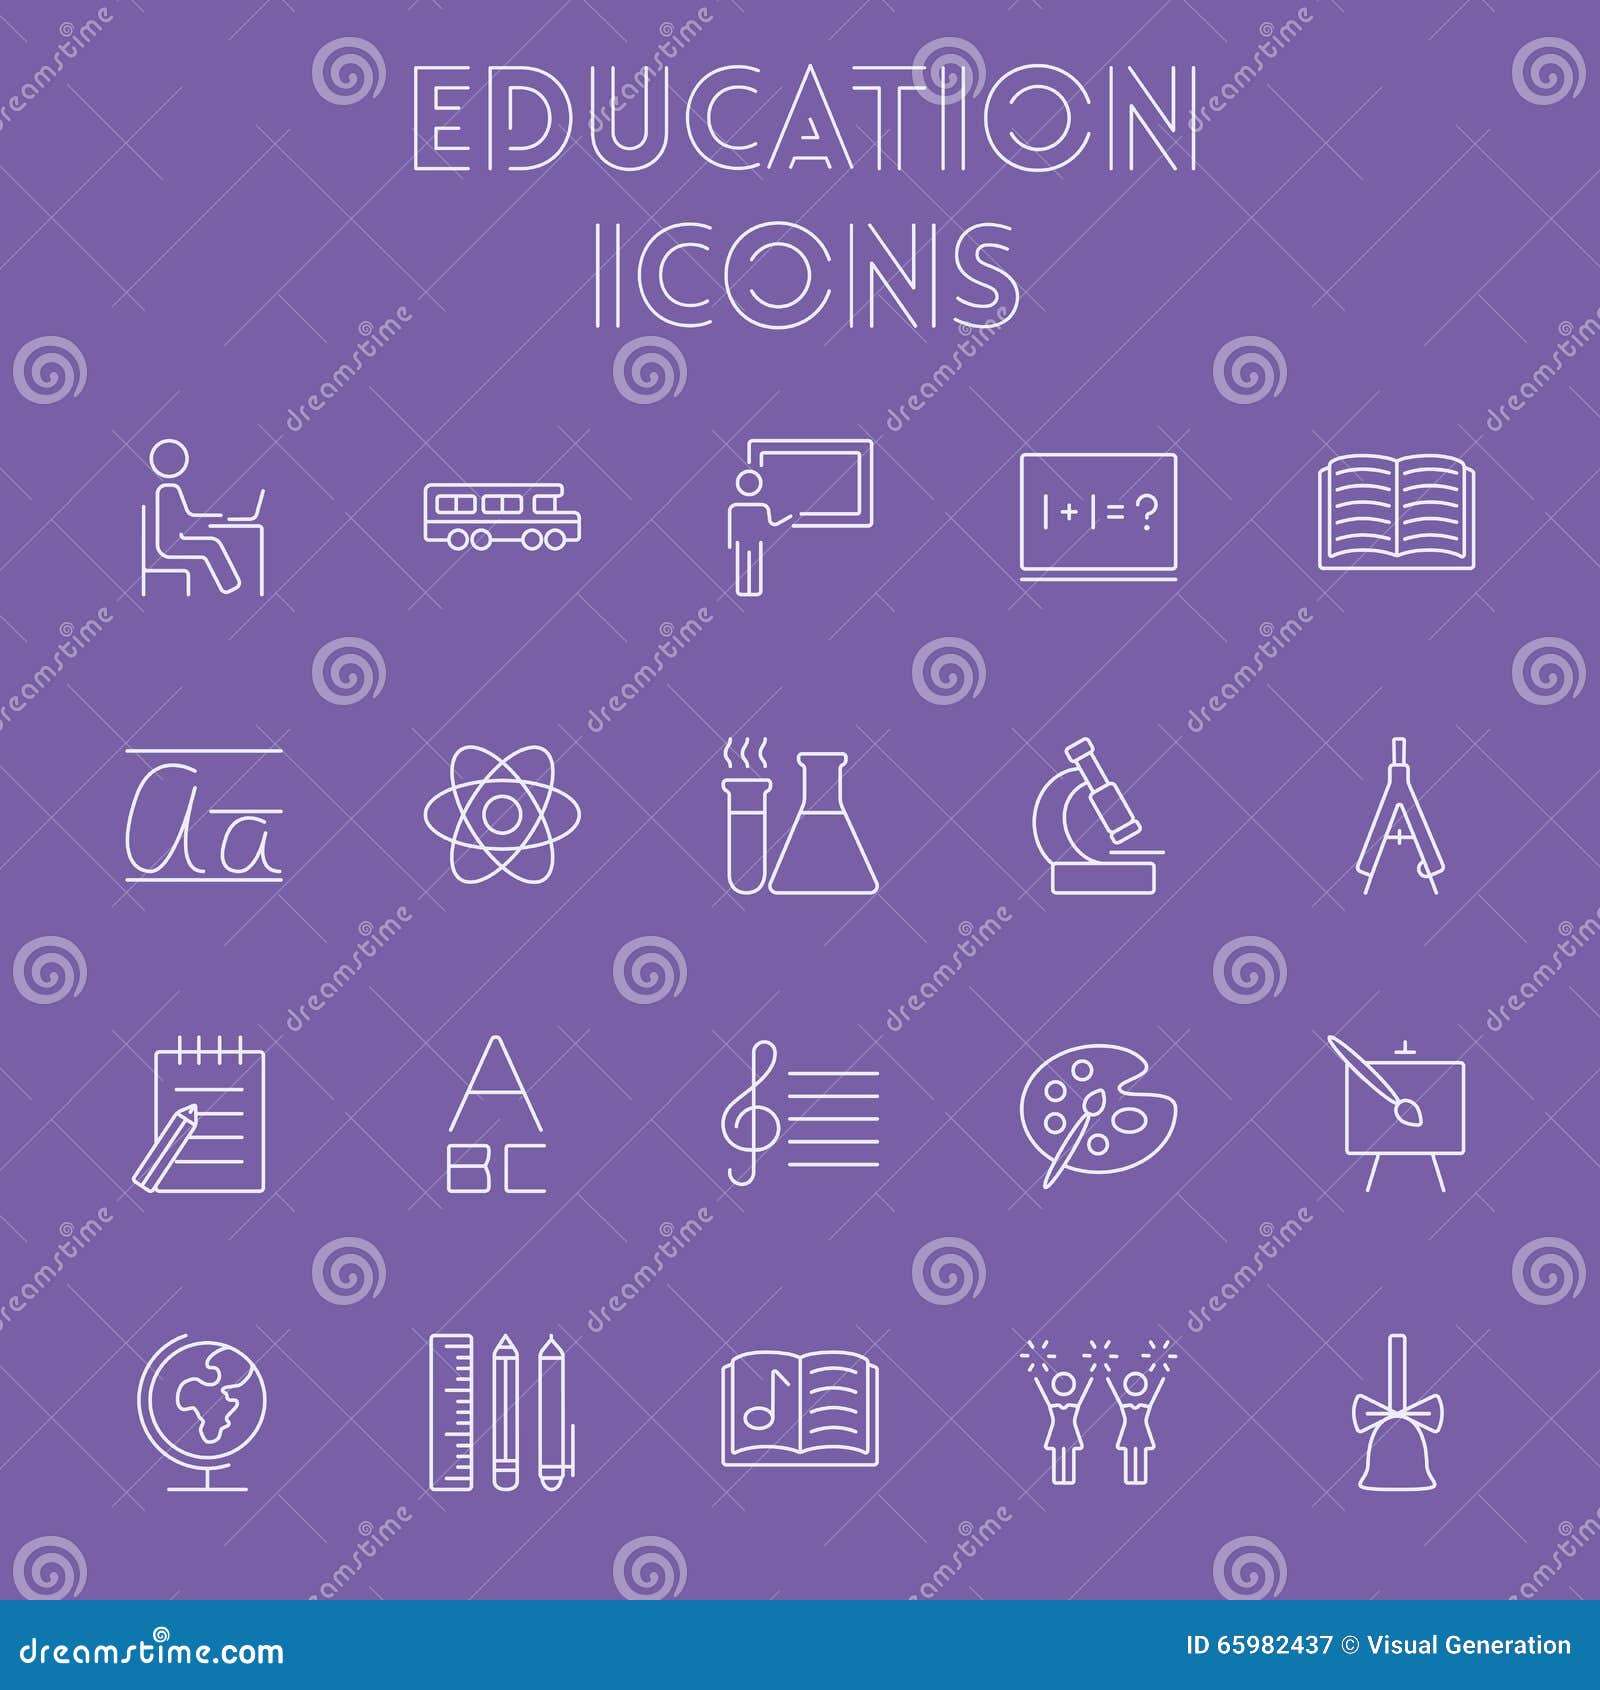 education icon set.